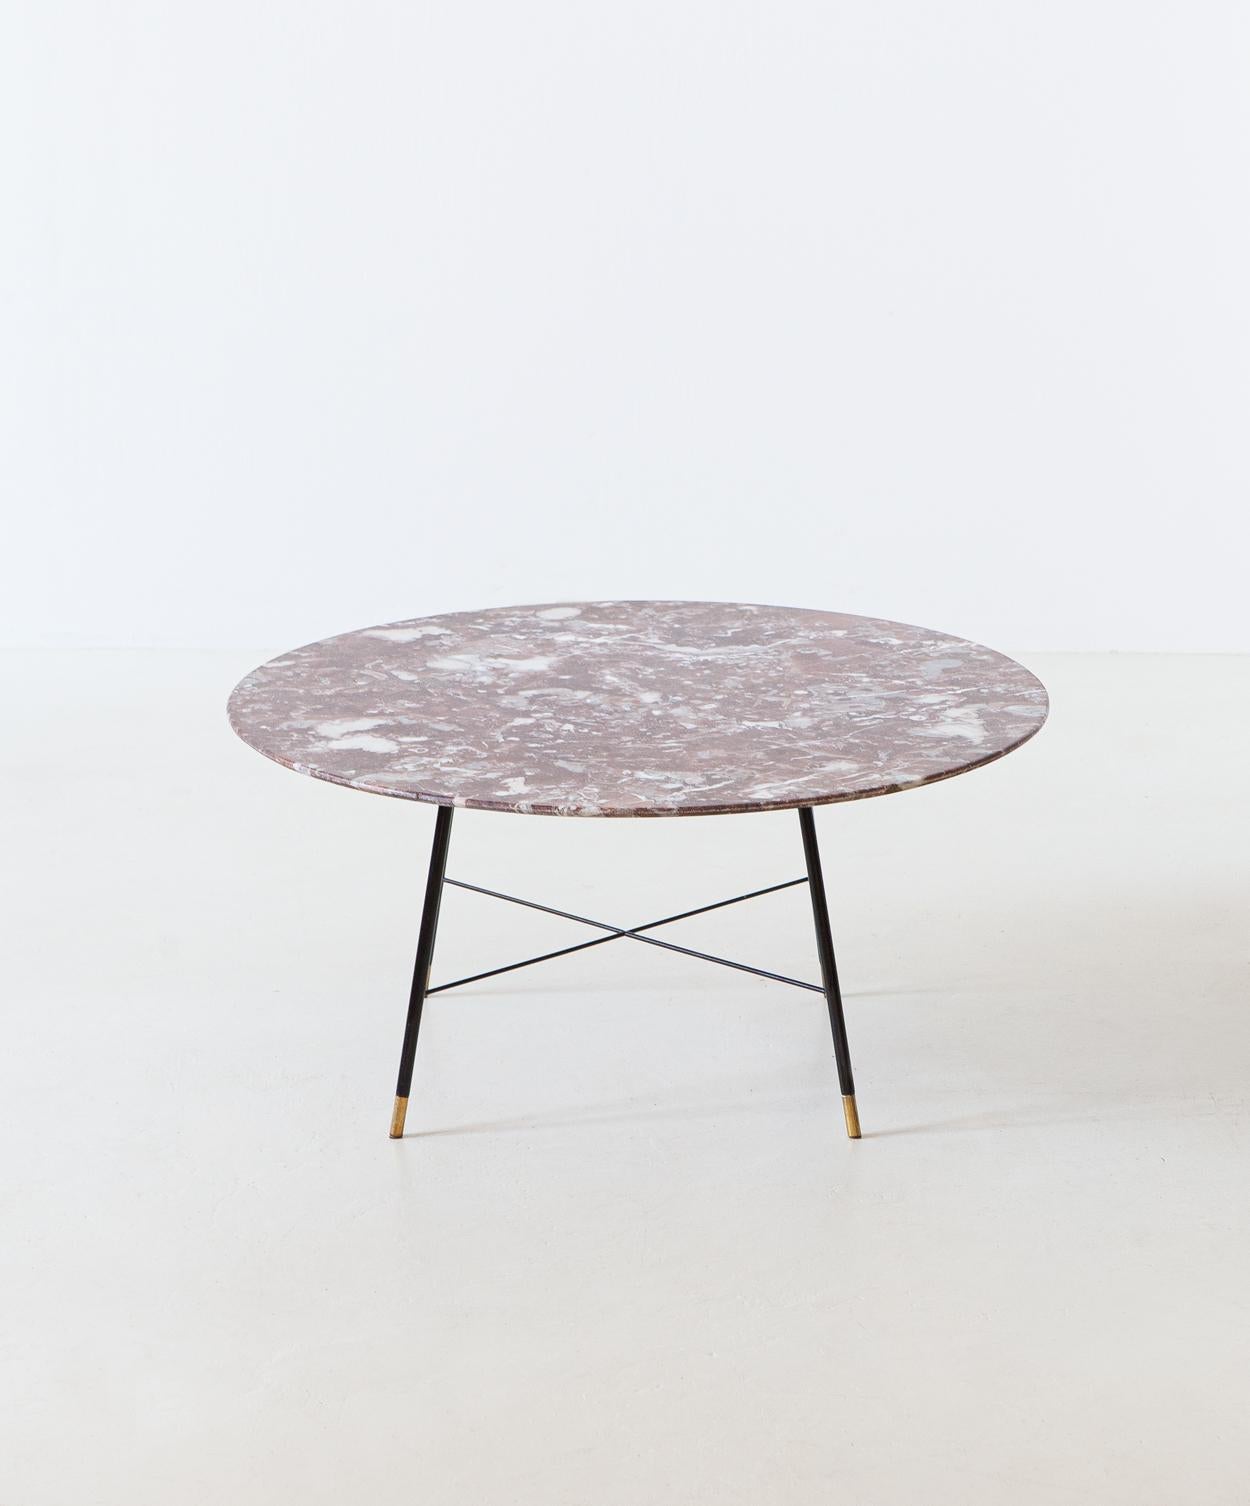 Mid-20th Century Very Rare Italian Round Marble Coffee Table by Ico Parisi, 1950s